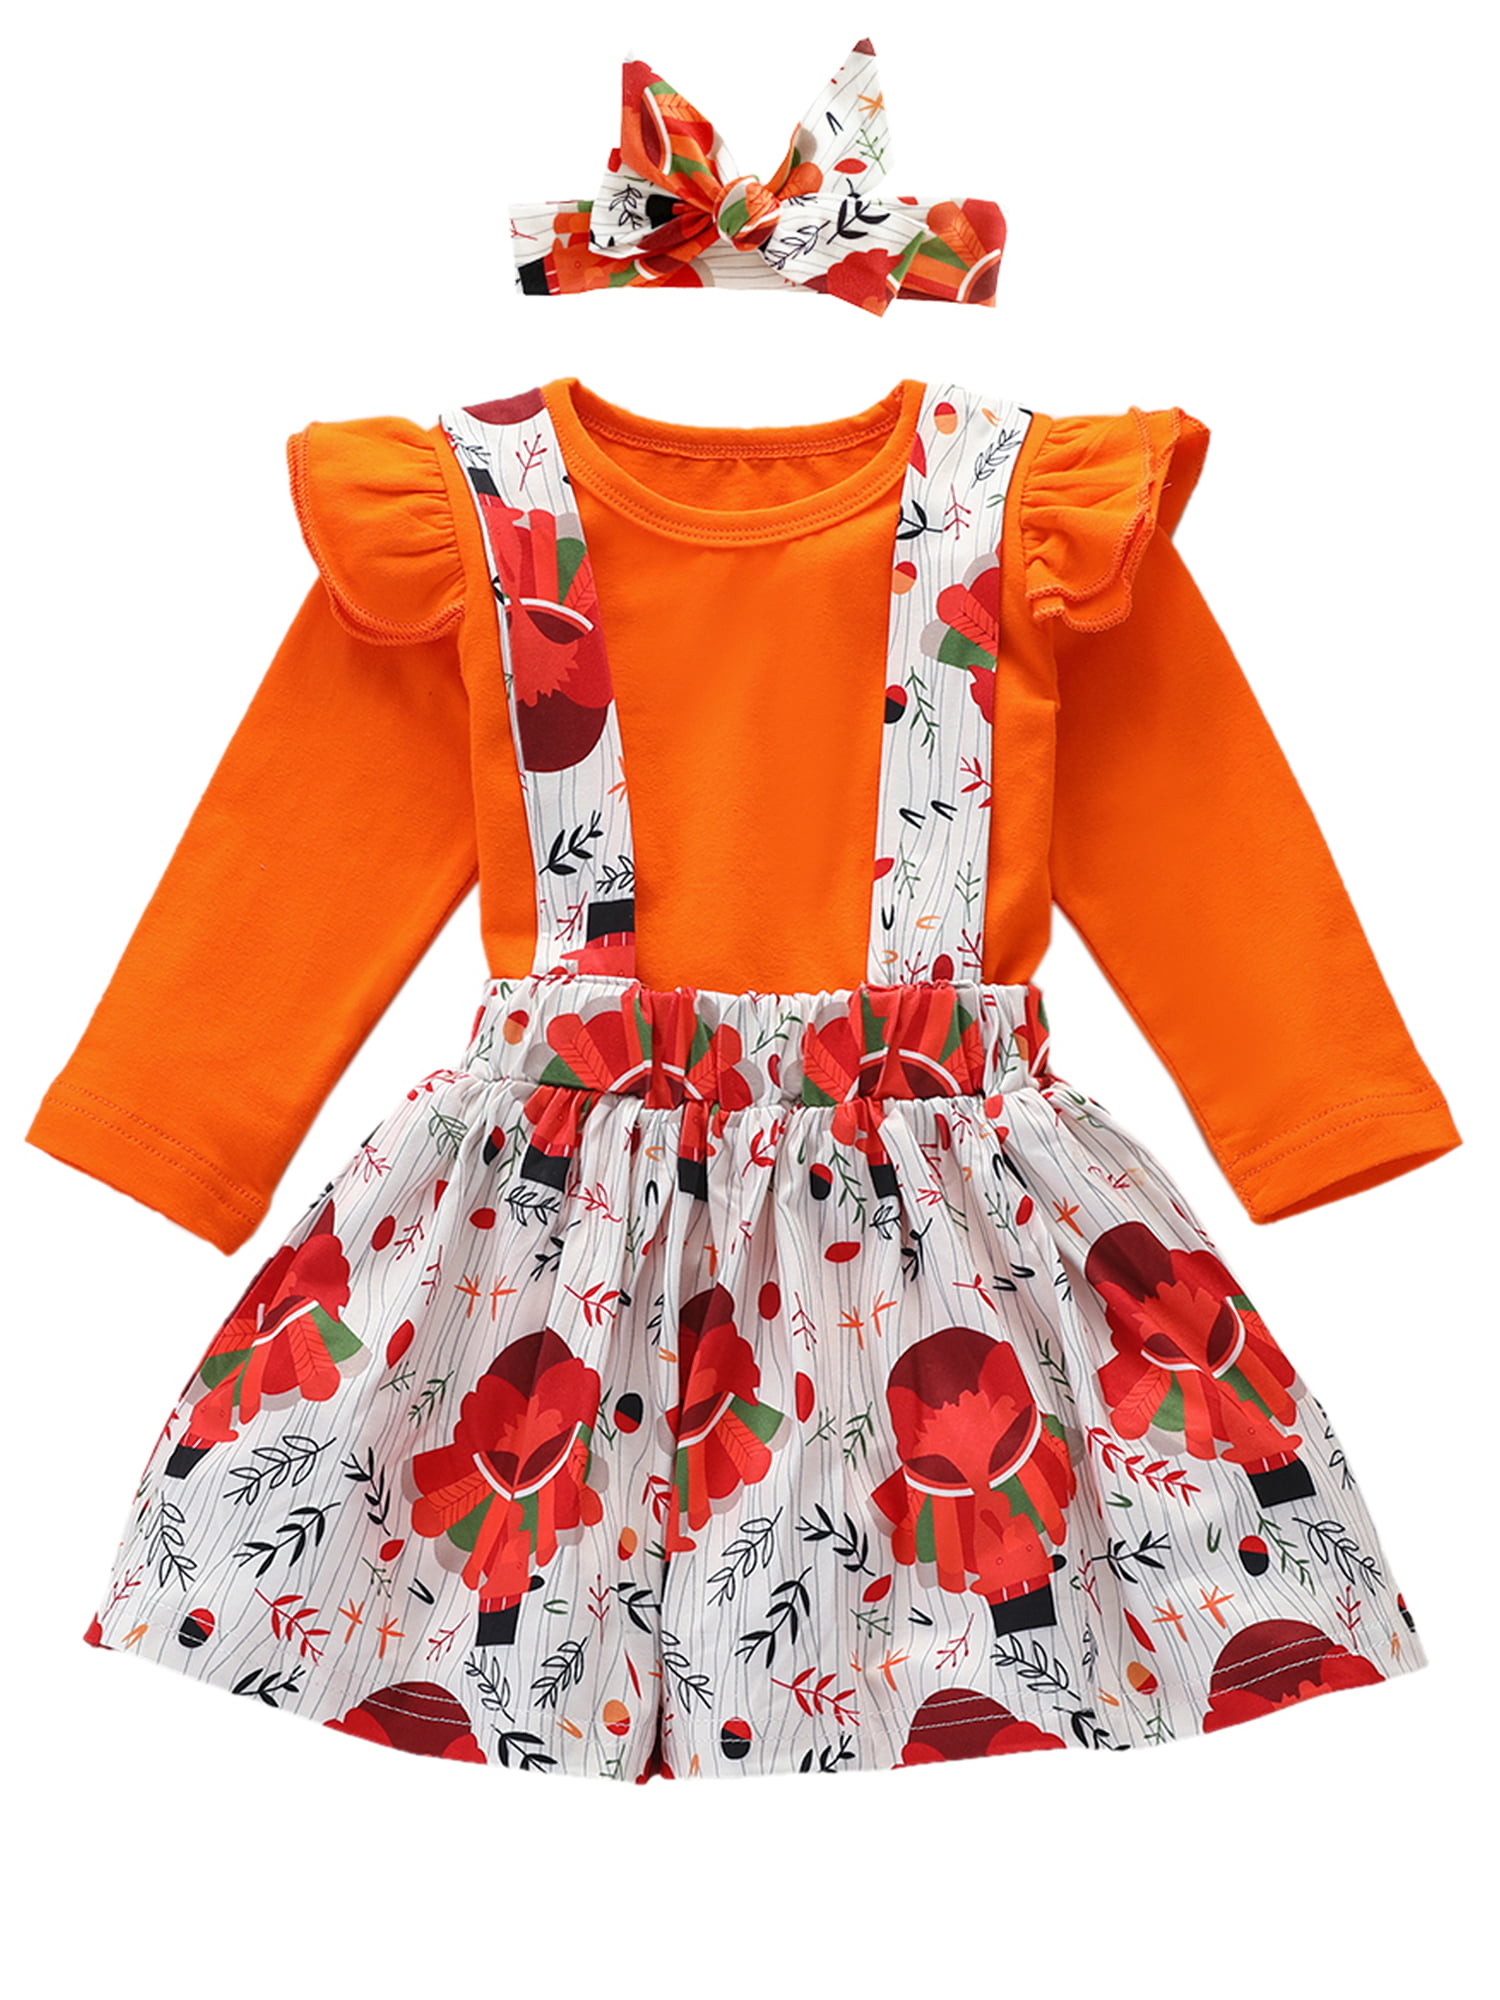 Duanyozu Thanksgiving Outfits Baby Girl Ruffle Top Shirt Turkey Skirt Overall 3pcs Set Com